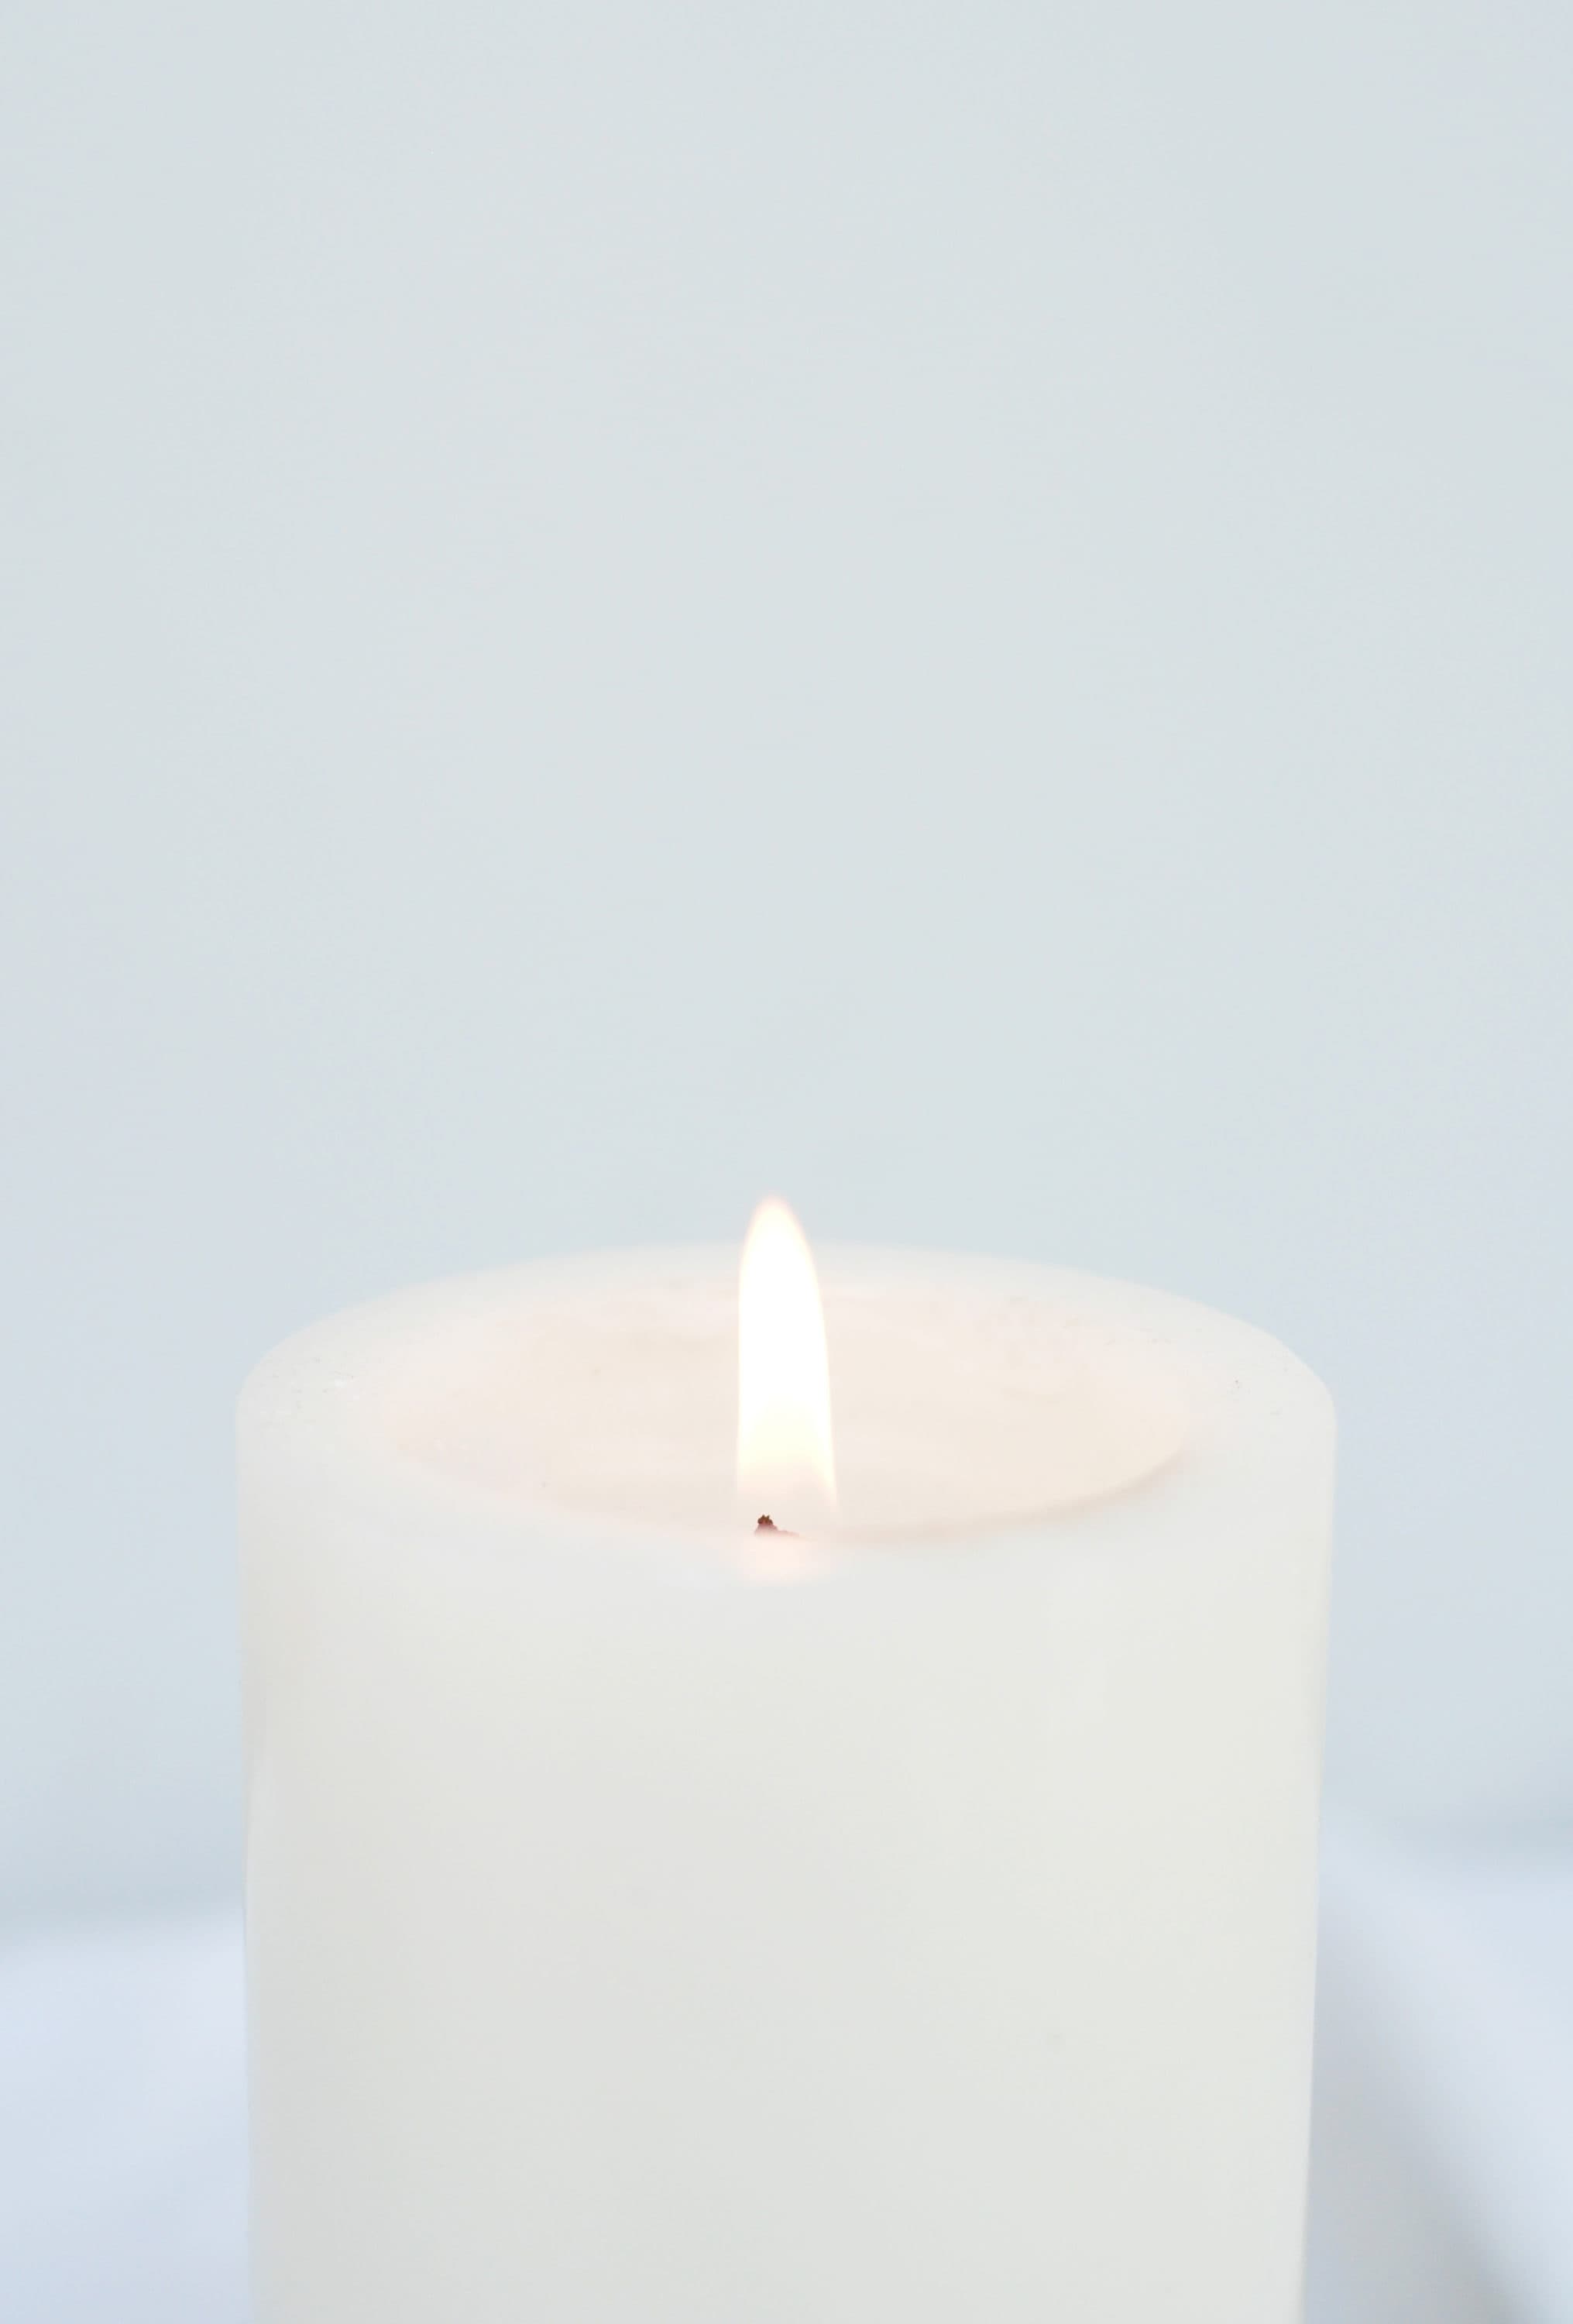 Plain White Candles /velas Blancas Simples -  Israel